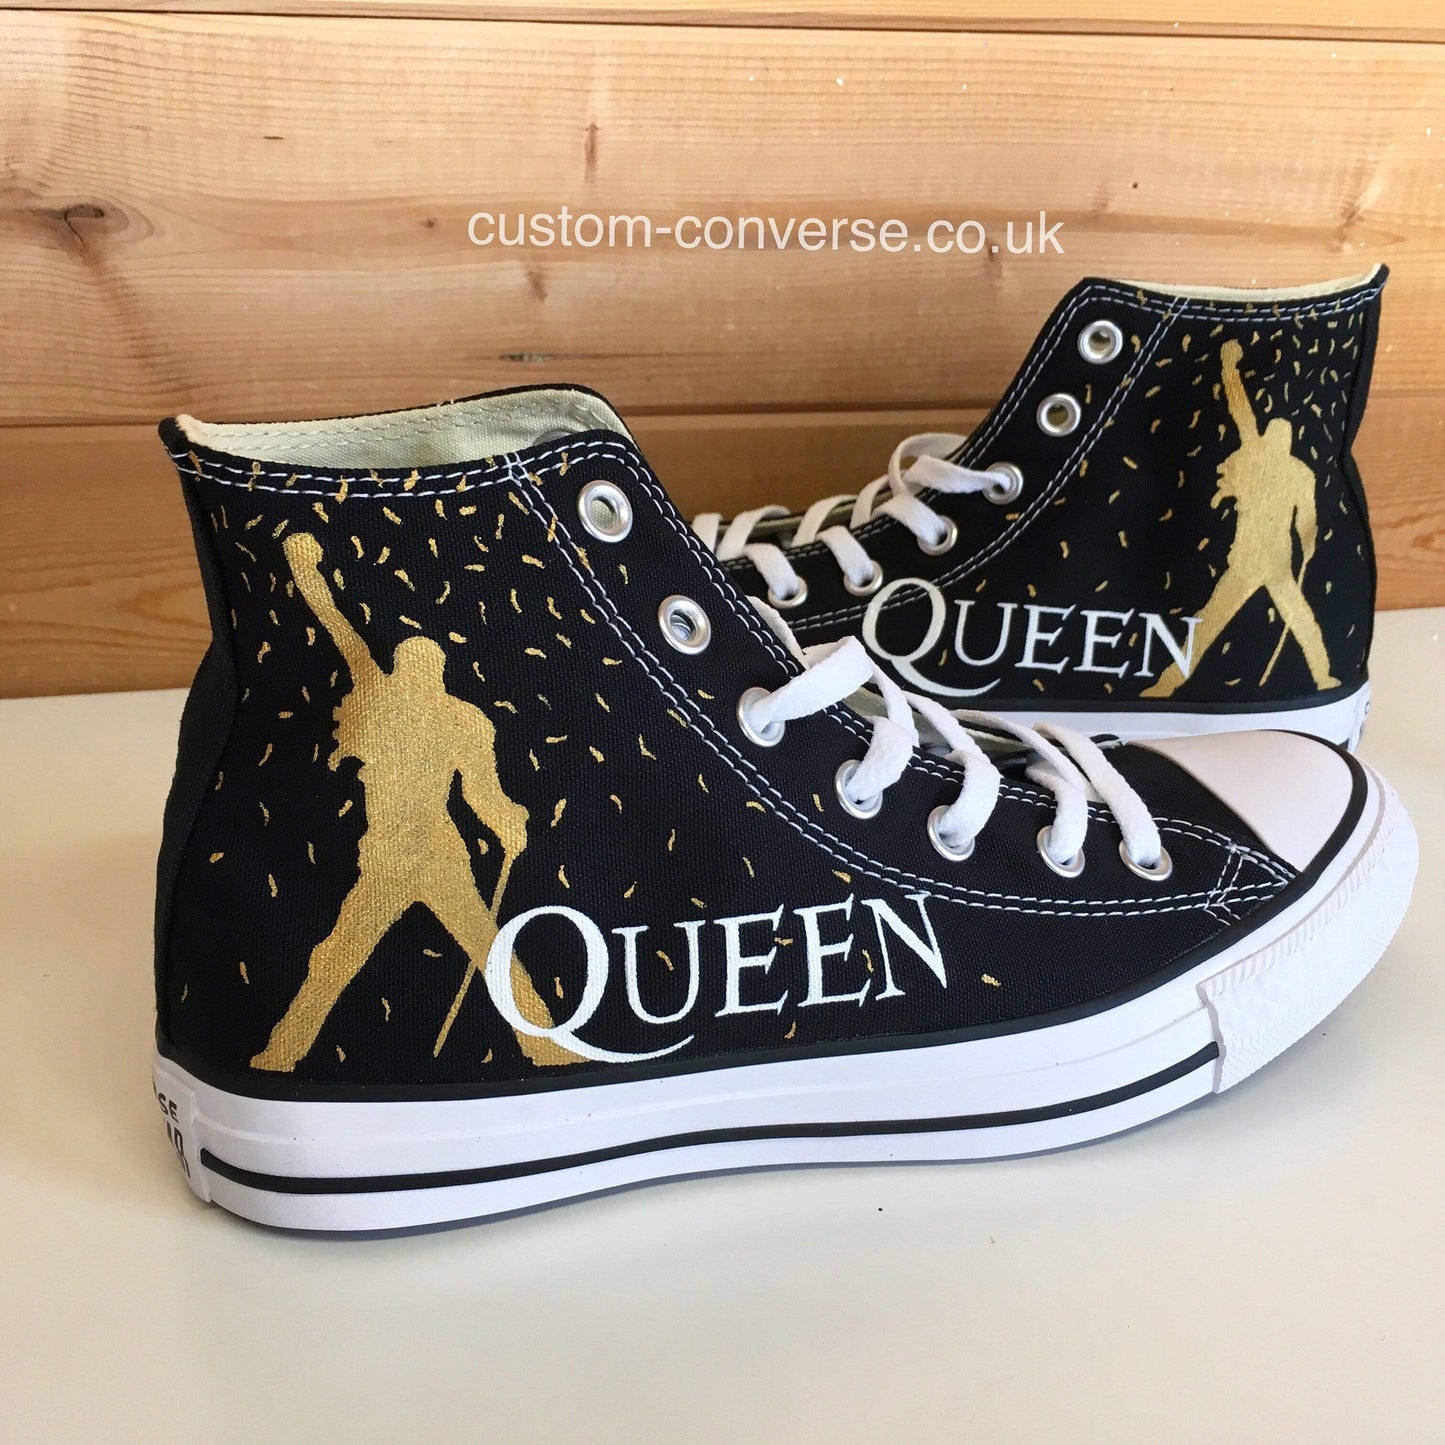 Queen Confetti - Custom Converse Ltd.